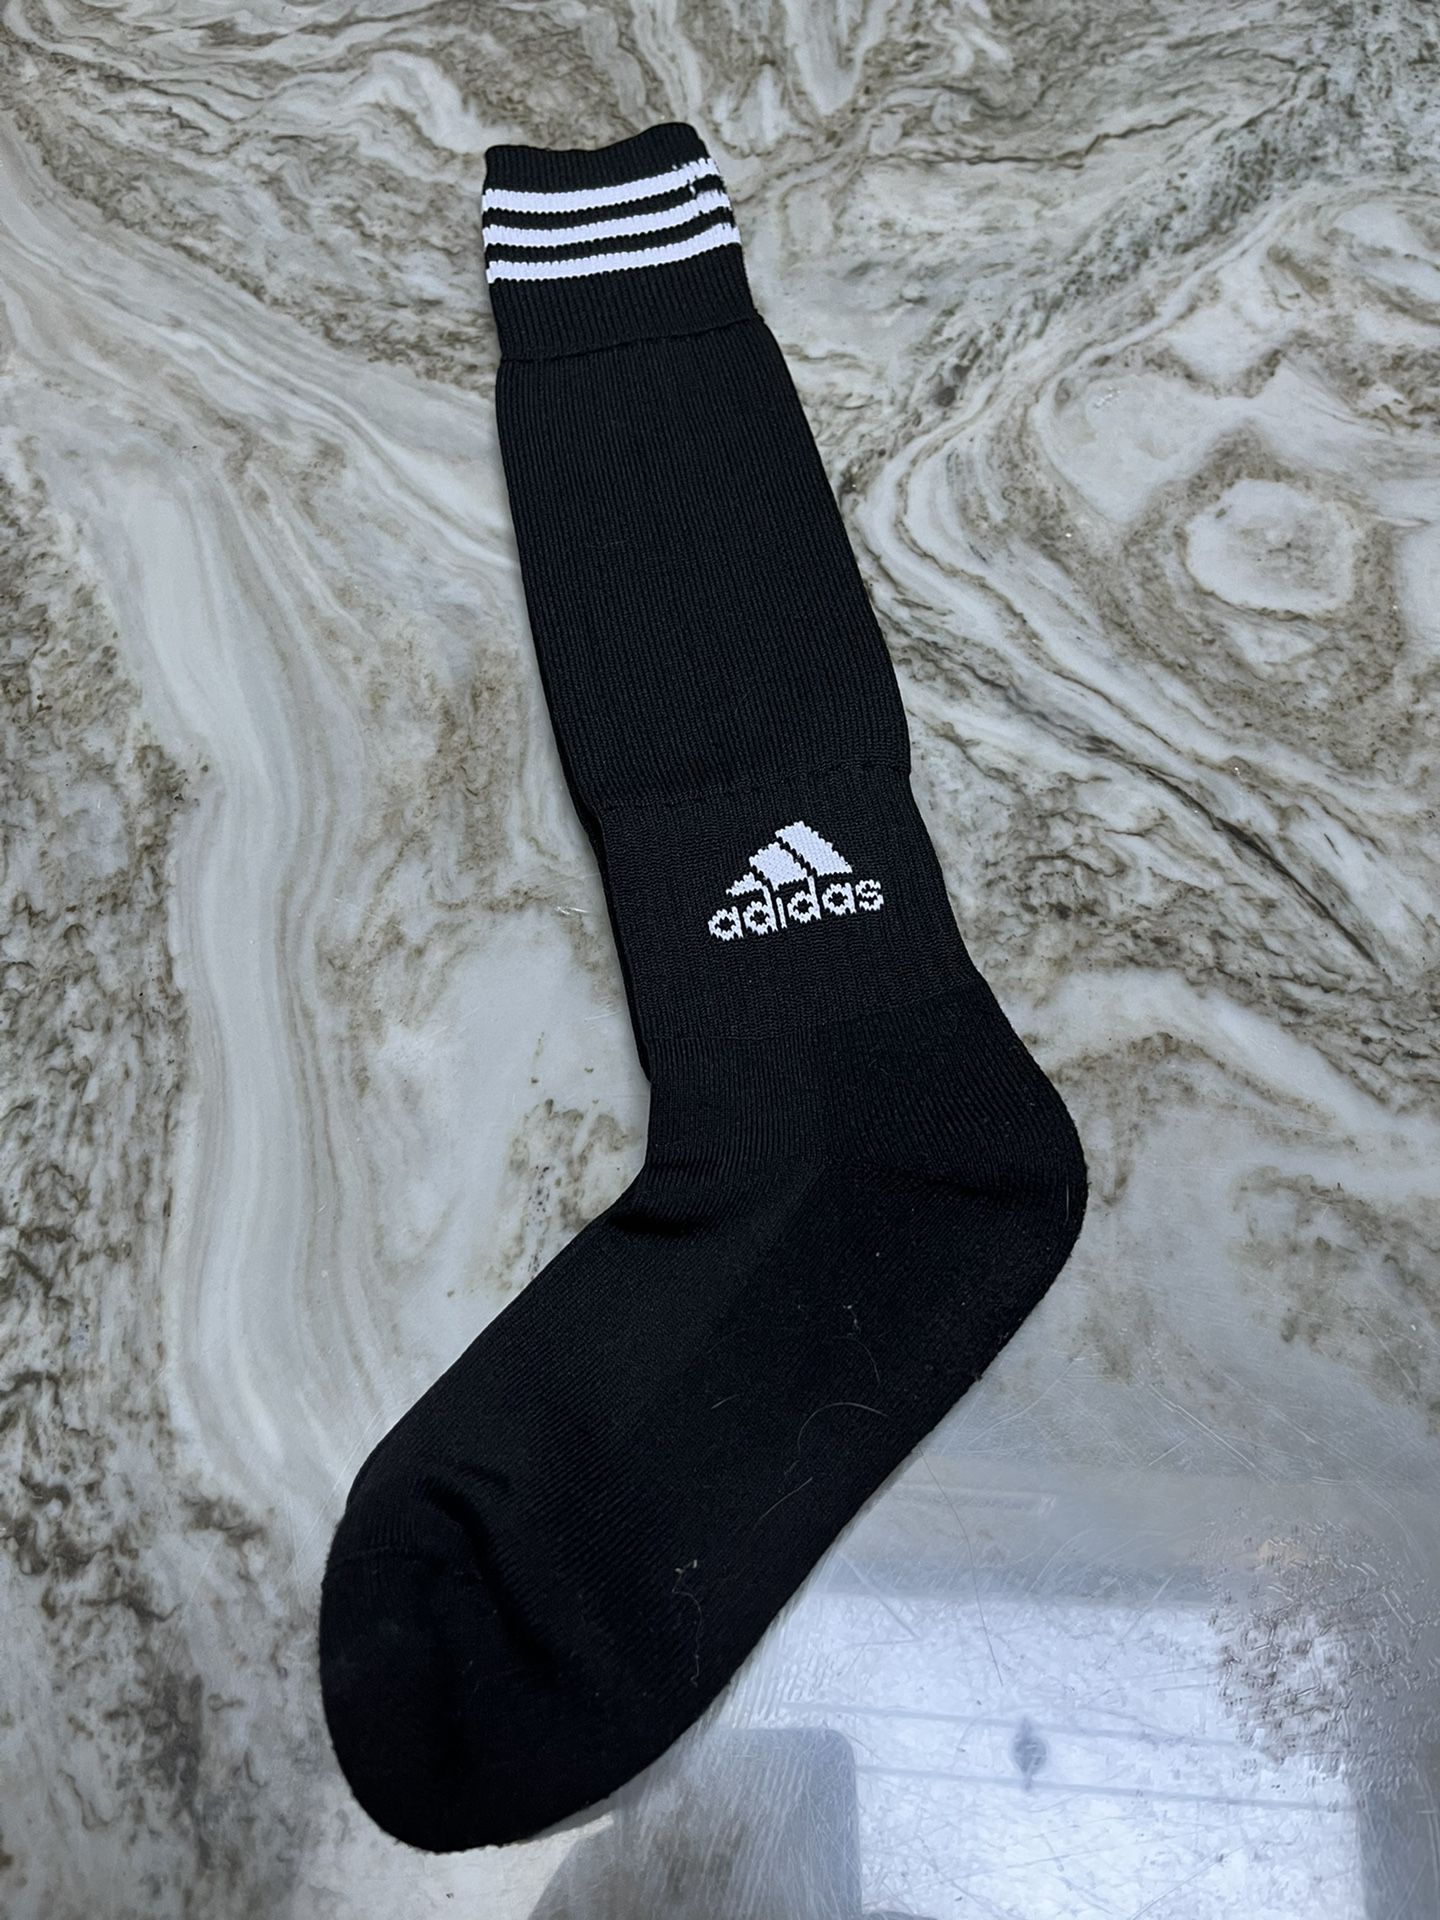 Adidas Athletic Socks New